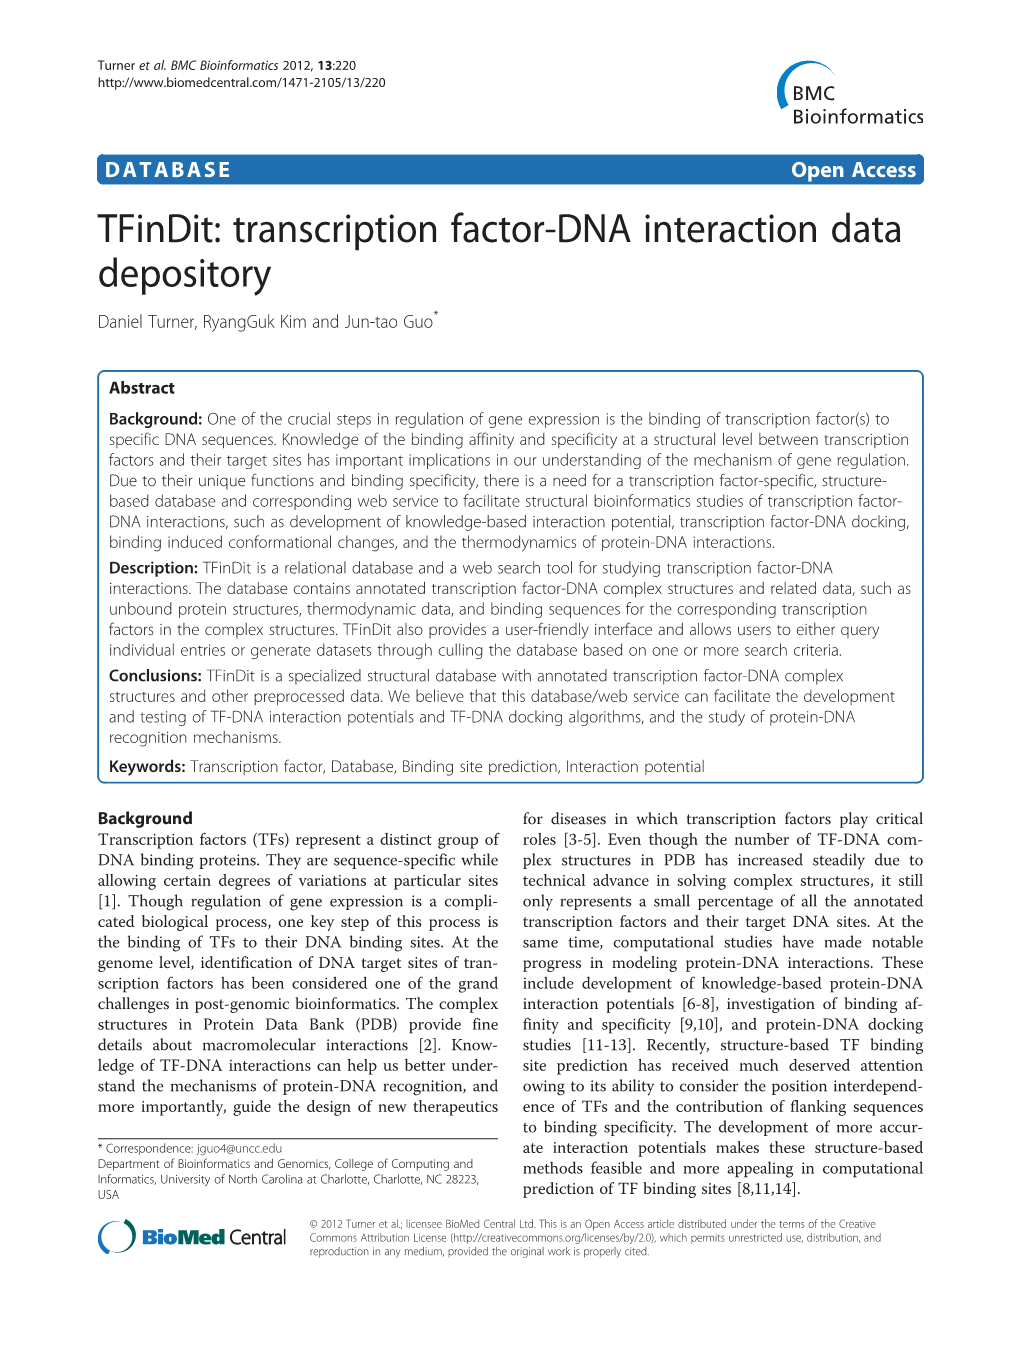 Tfindit: Transcription Factor-DNA Interaction Data Depository Daniel Turner, Ryangguk Kim and Jun-Tao Guo*